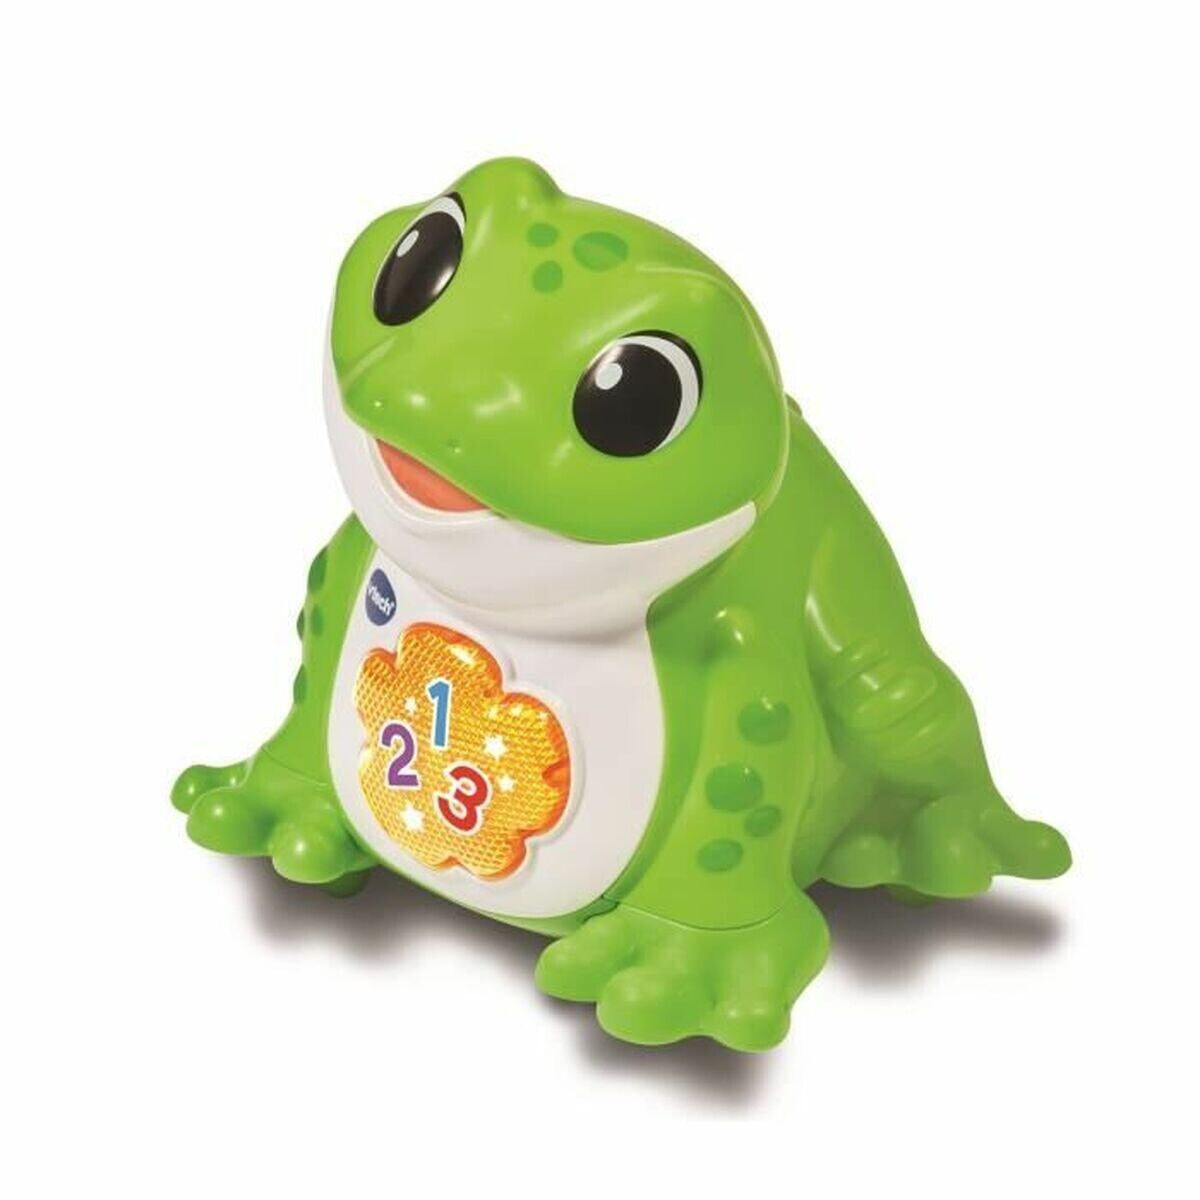 Educational game Vtech Baby Pop, ma grenouille hop hop (FR)